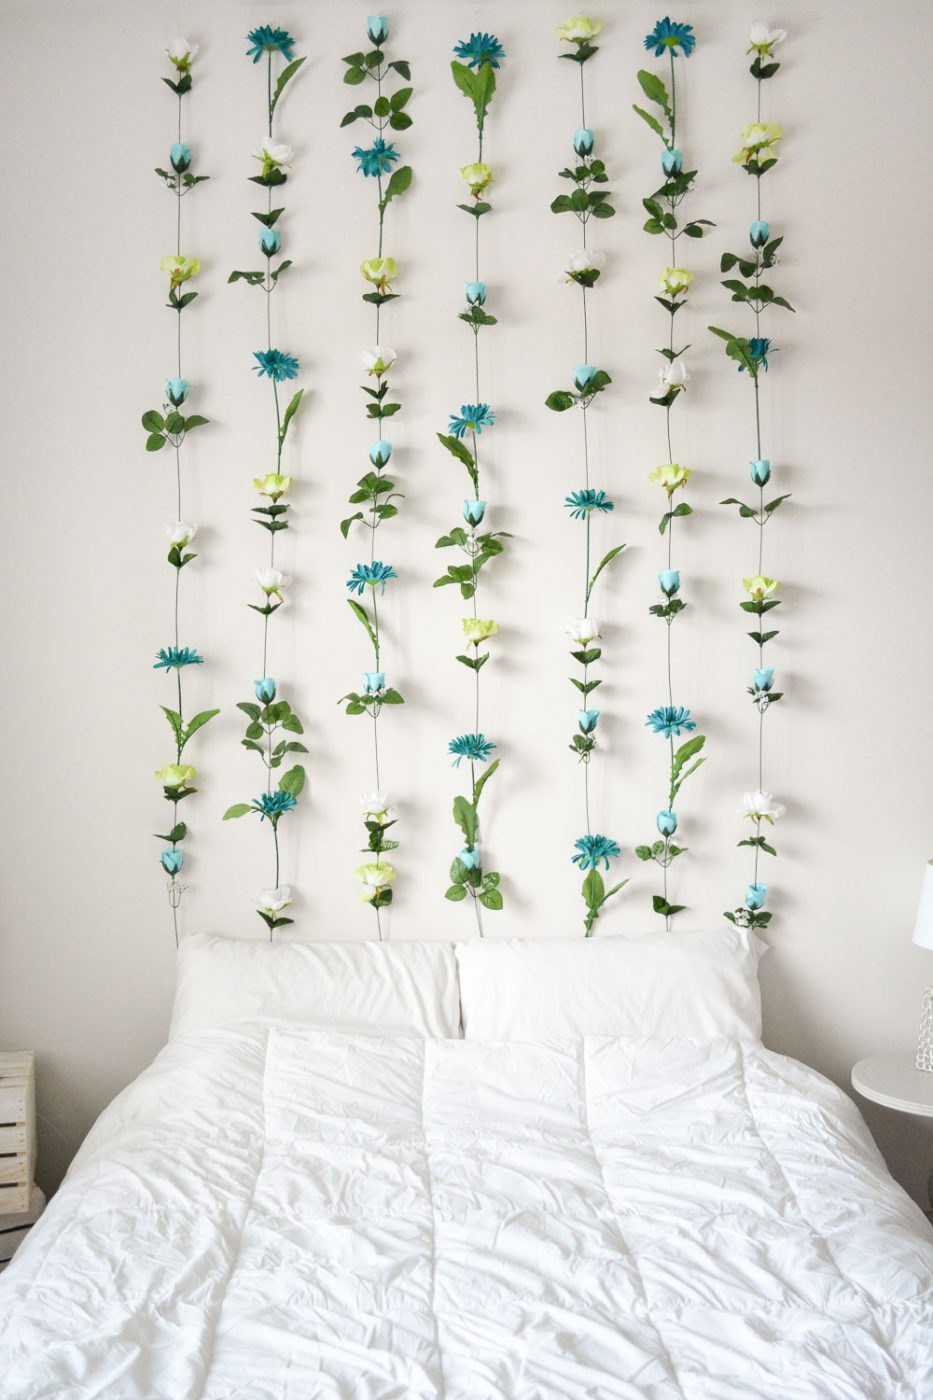 DIY Bedroom Wall Decor
 DIY Flower Wall Headboard Home Decor